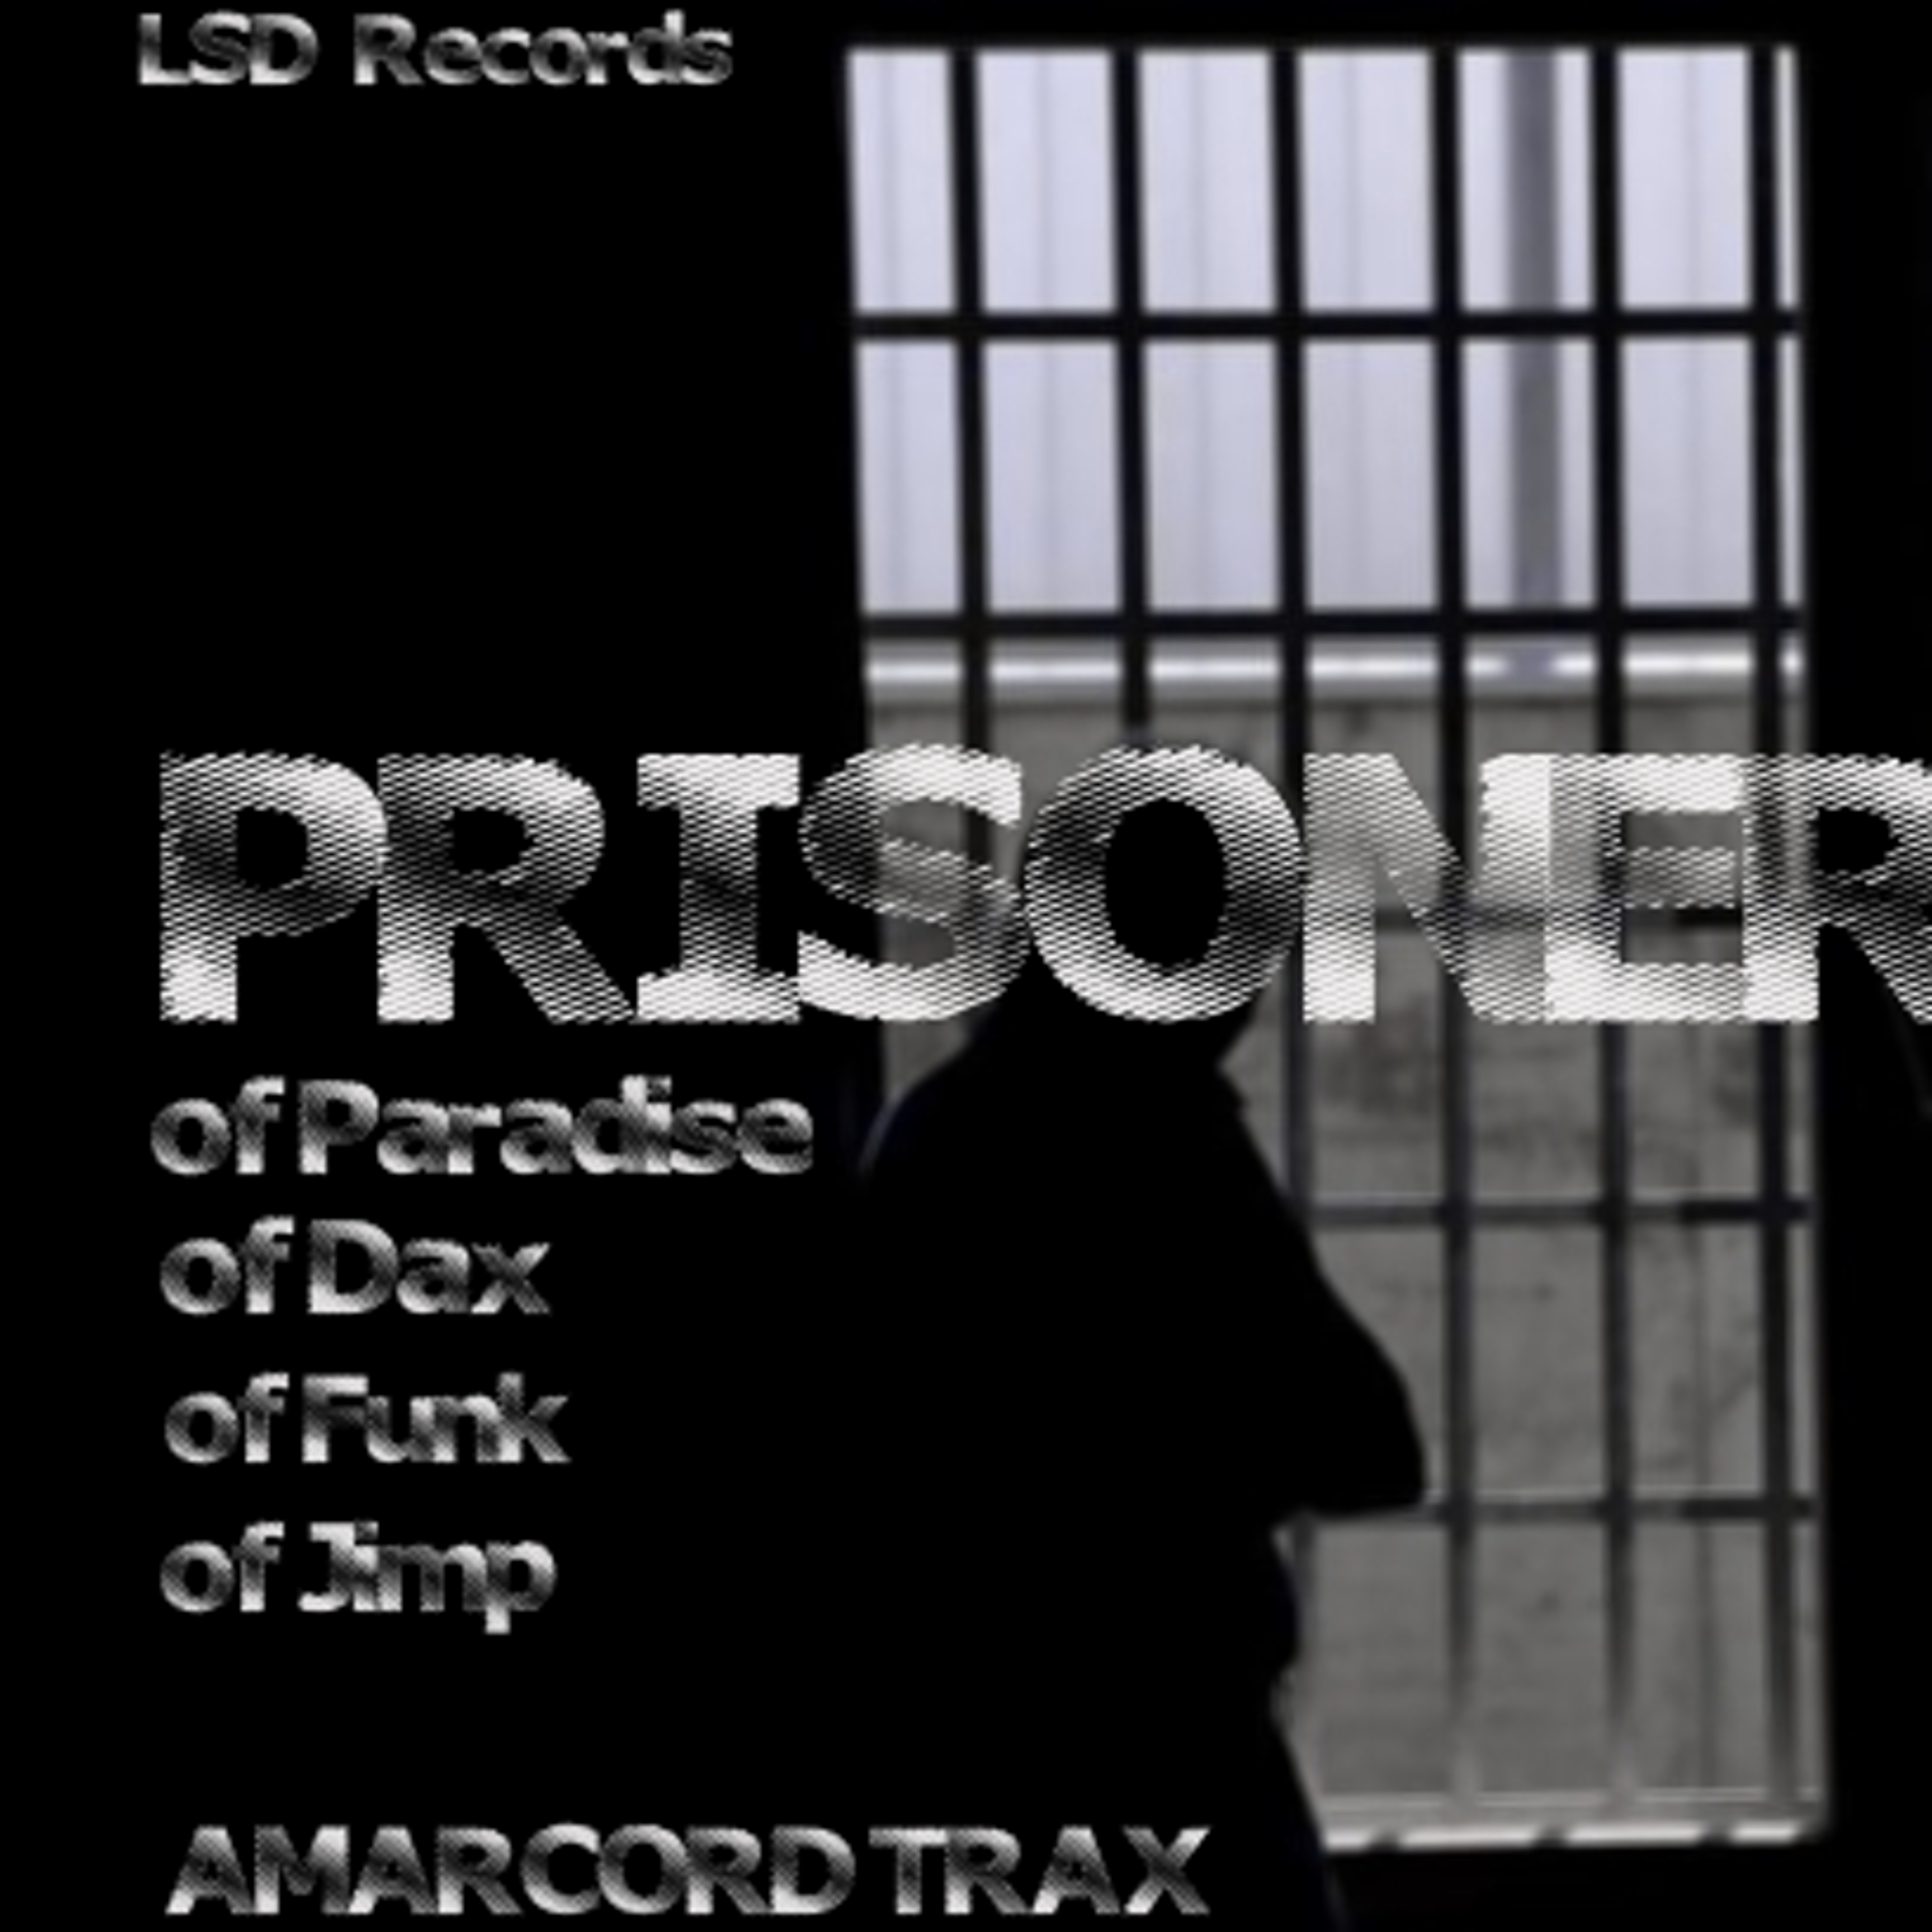 Prisoner of Jimp